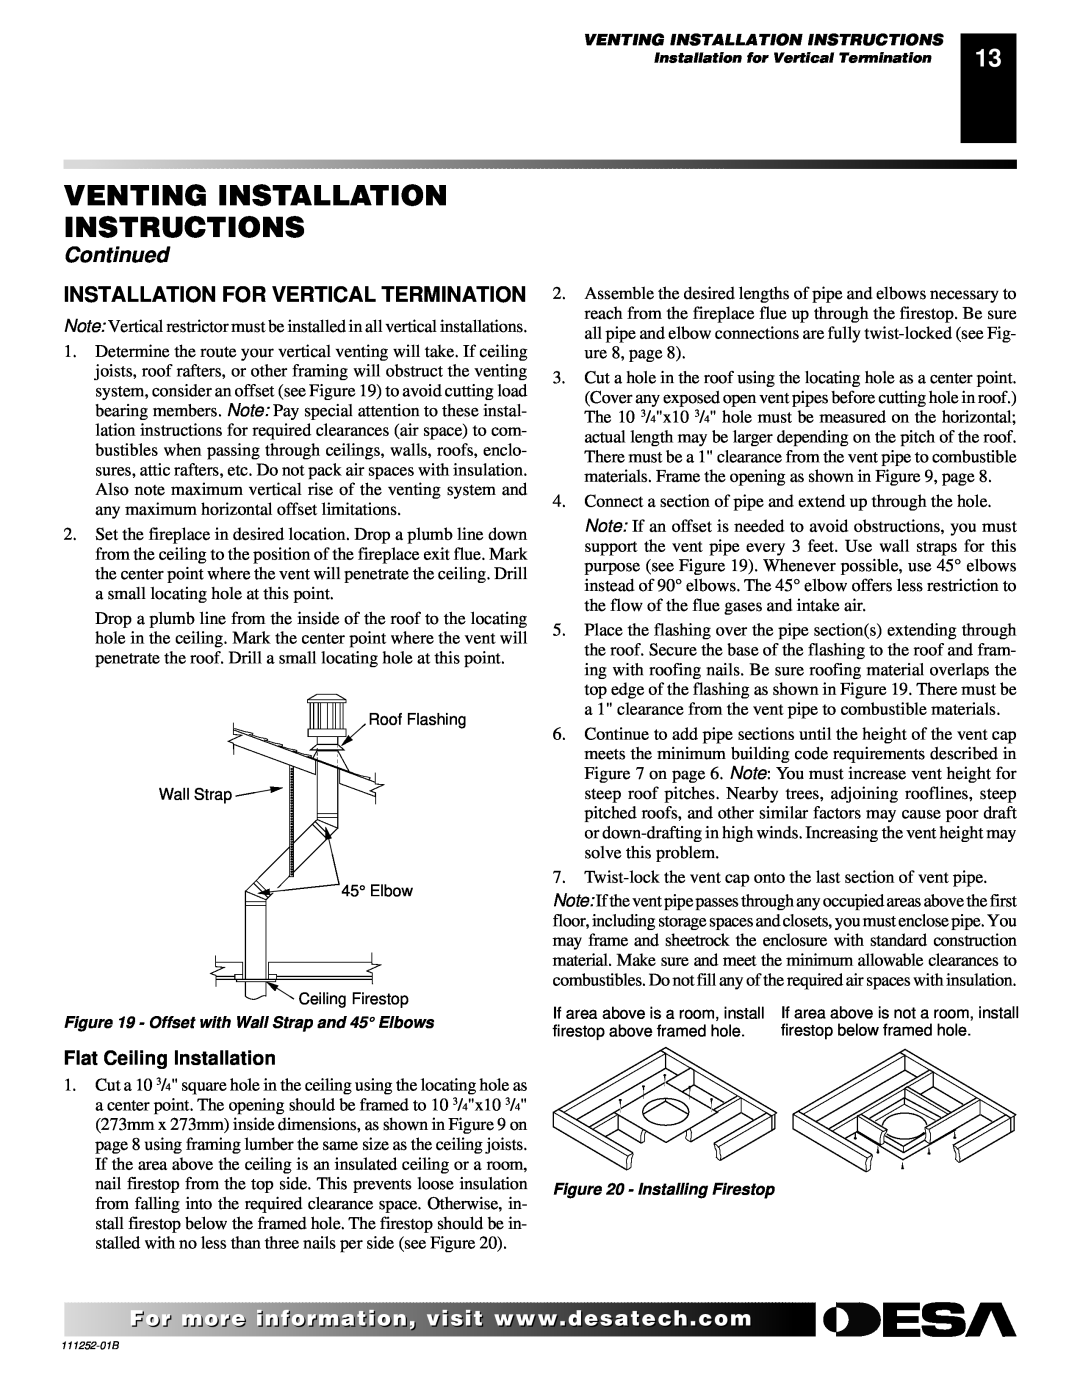 Desa CHDV36NRA, V36NA, V36PA, (V)V36PA(1) Installation For Vertical Termination, Flat Ceiling Installation, Continued 